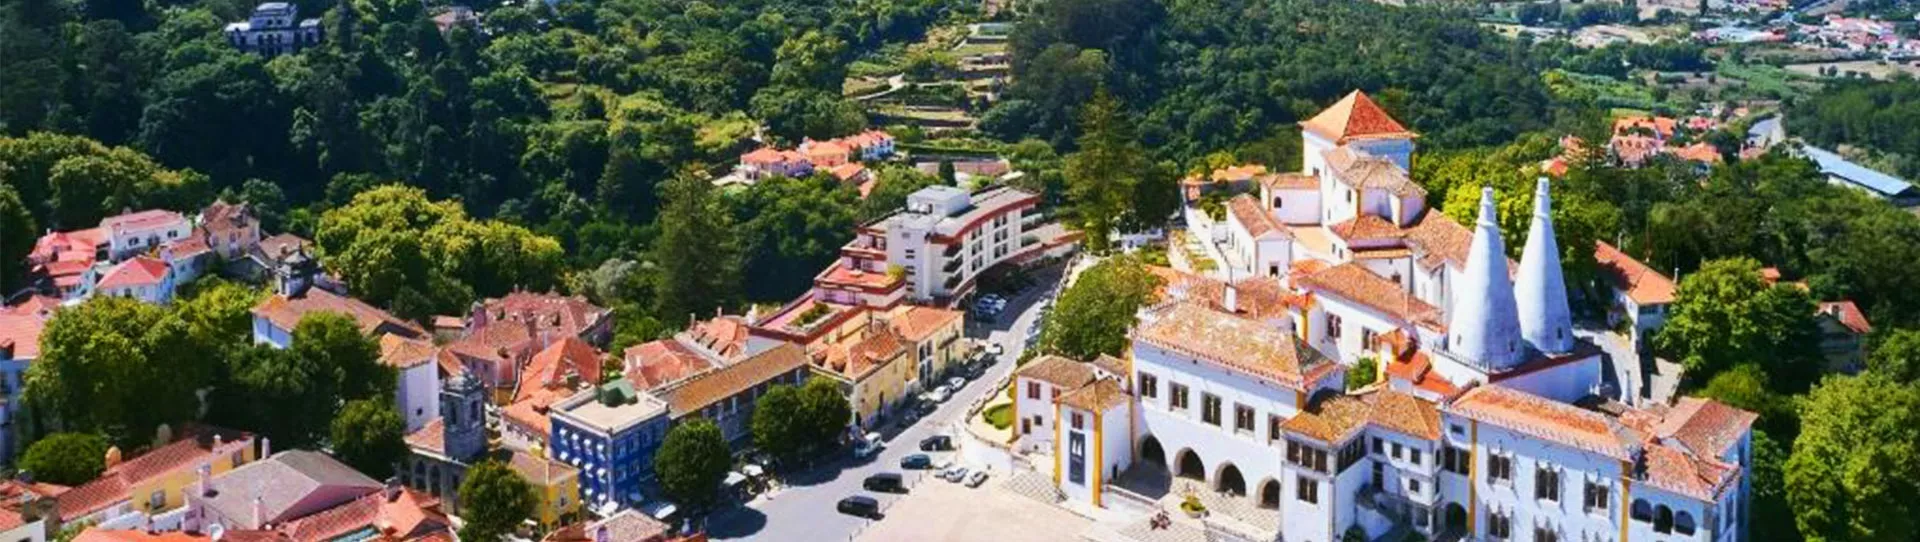 Portugal golf holidays - Avani Sintra - Photo 1